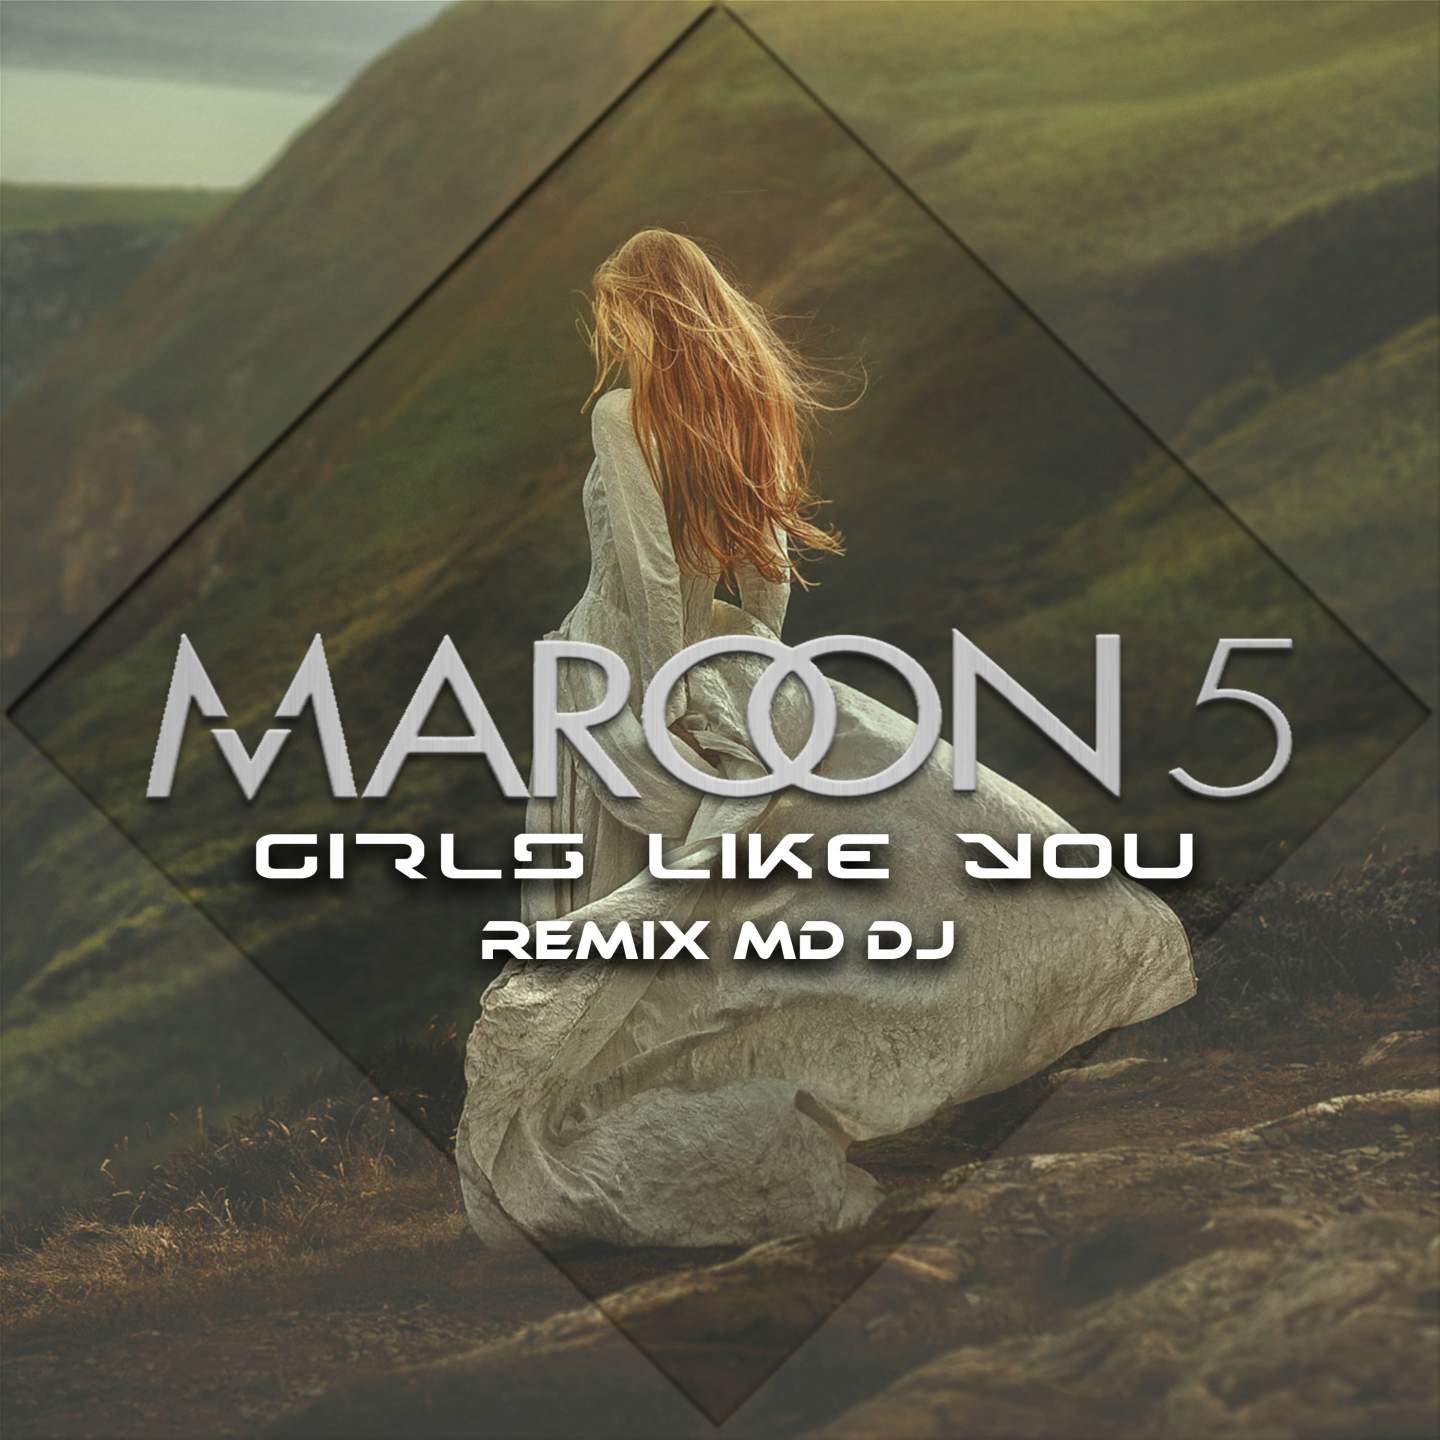 Girls Like You Feat Maroon 5 (MD Dj Remix) -
                    Luxe radio